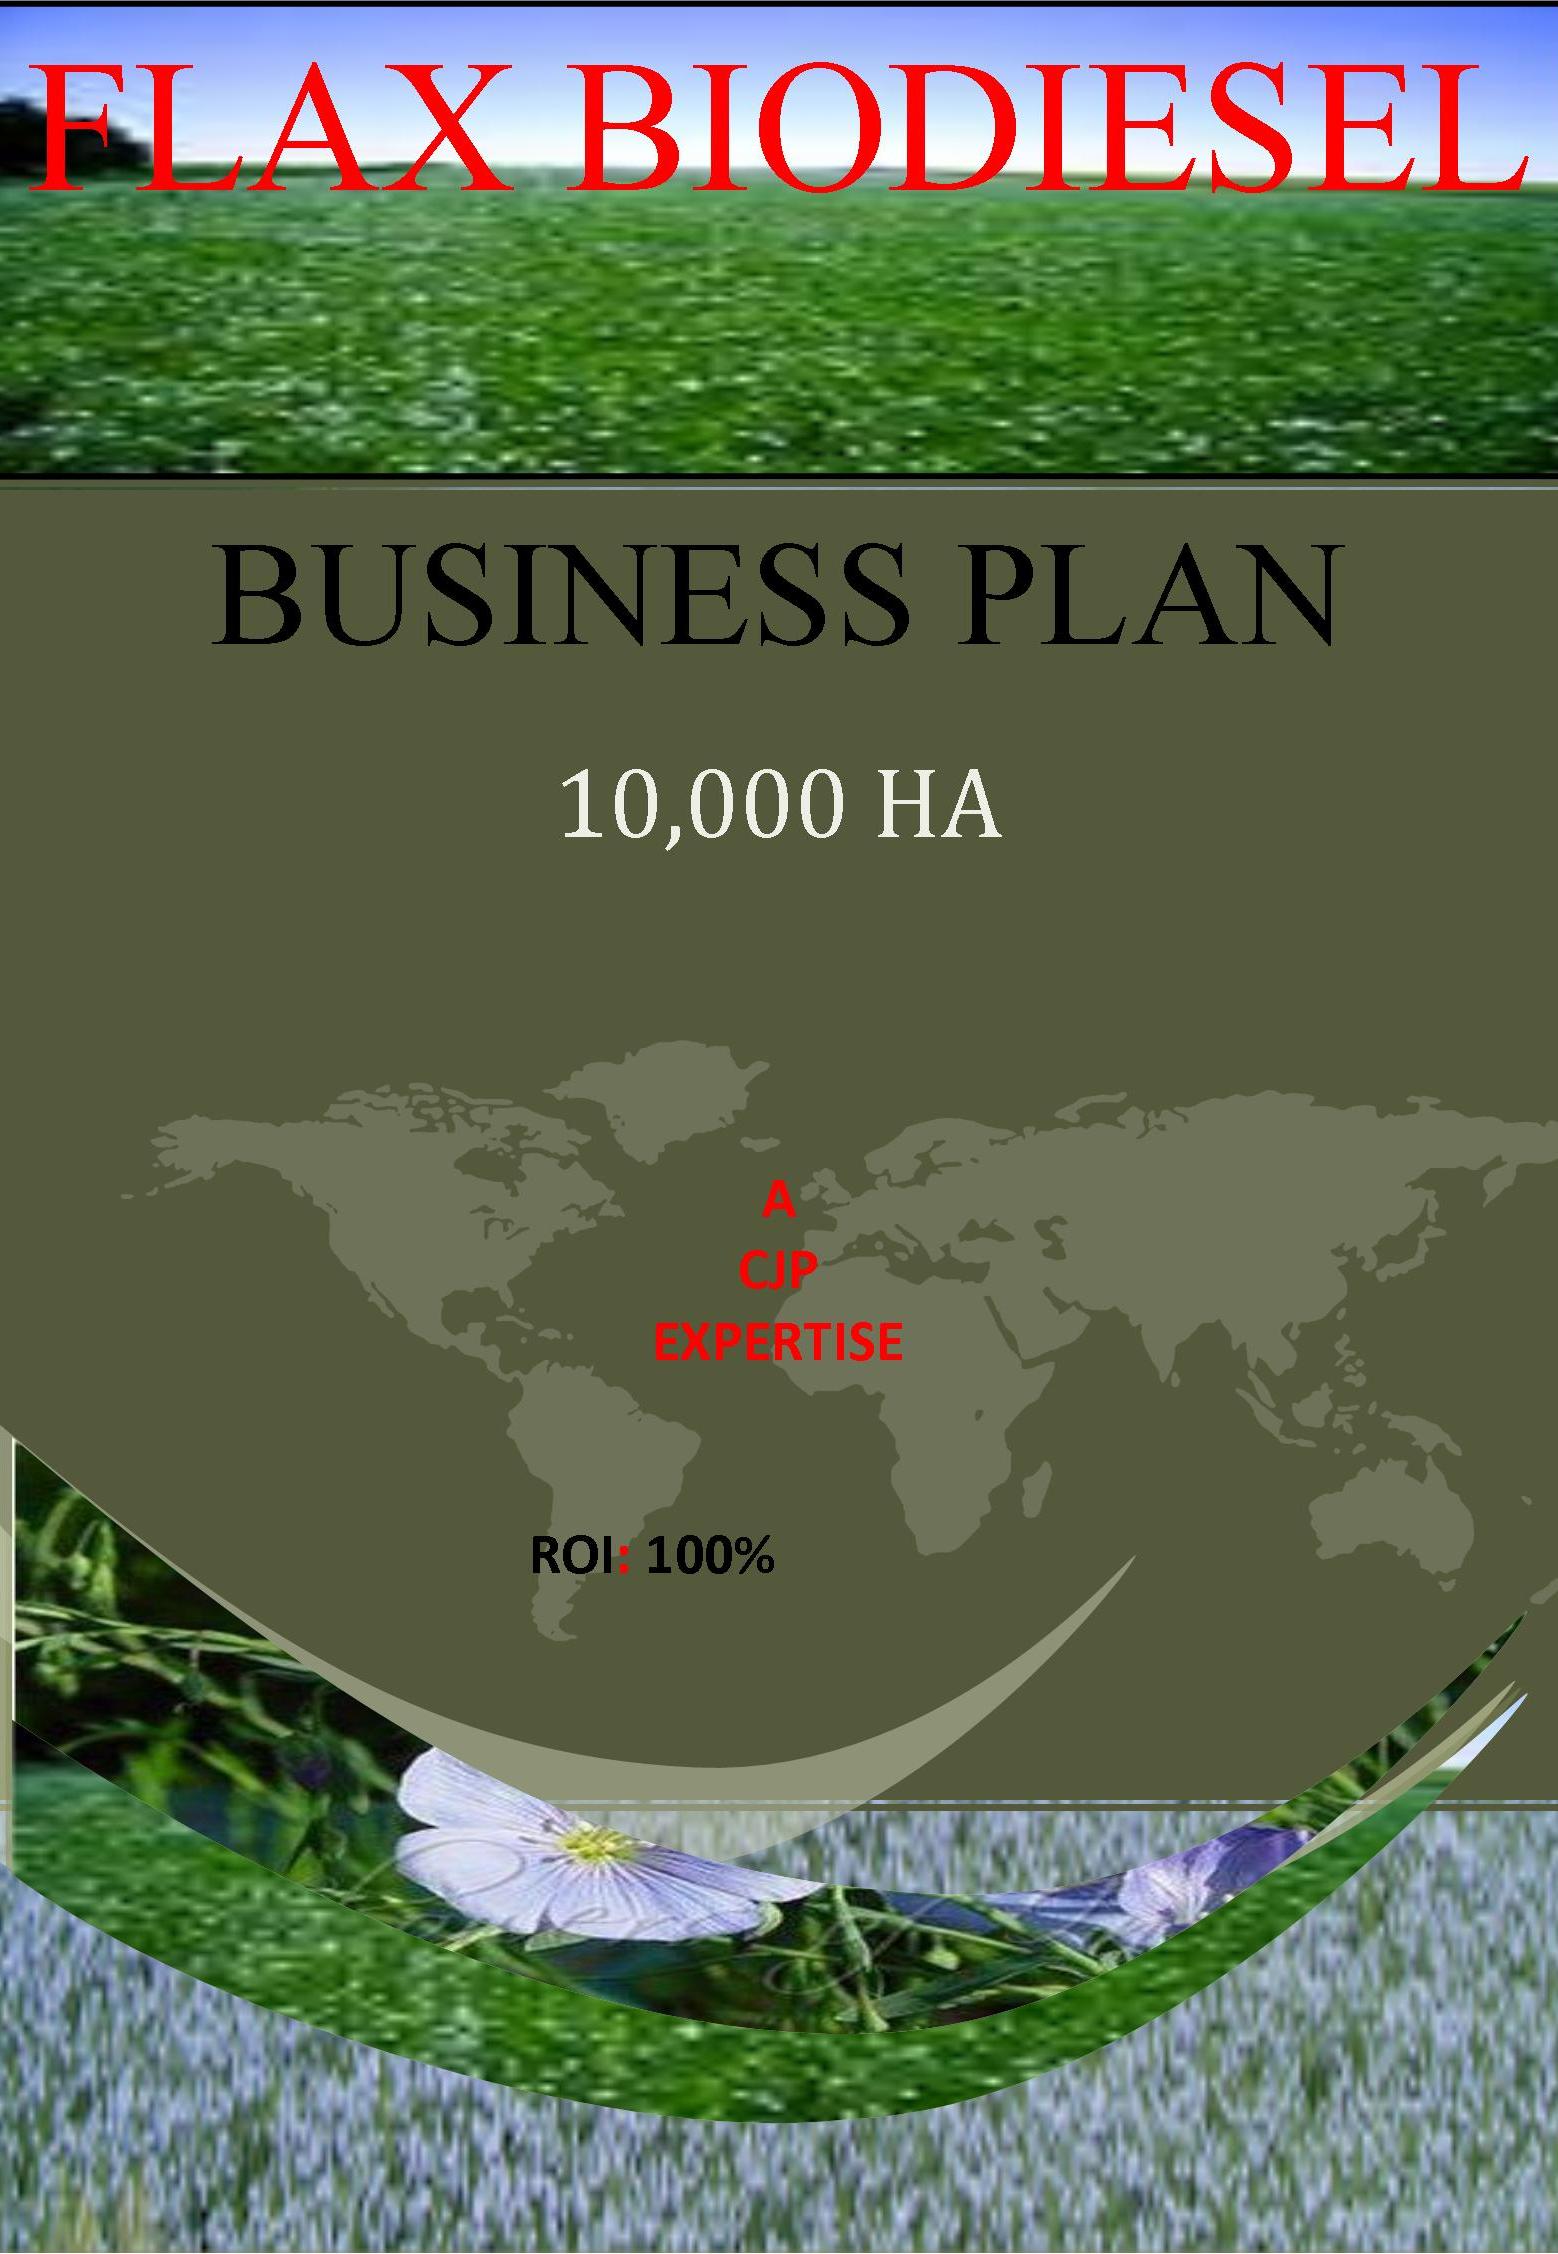 flax biodiesel business plan